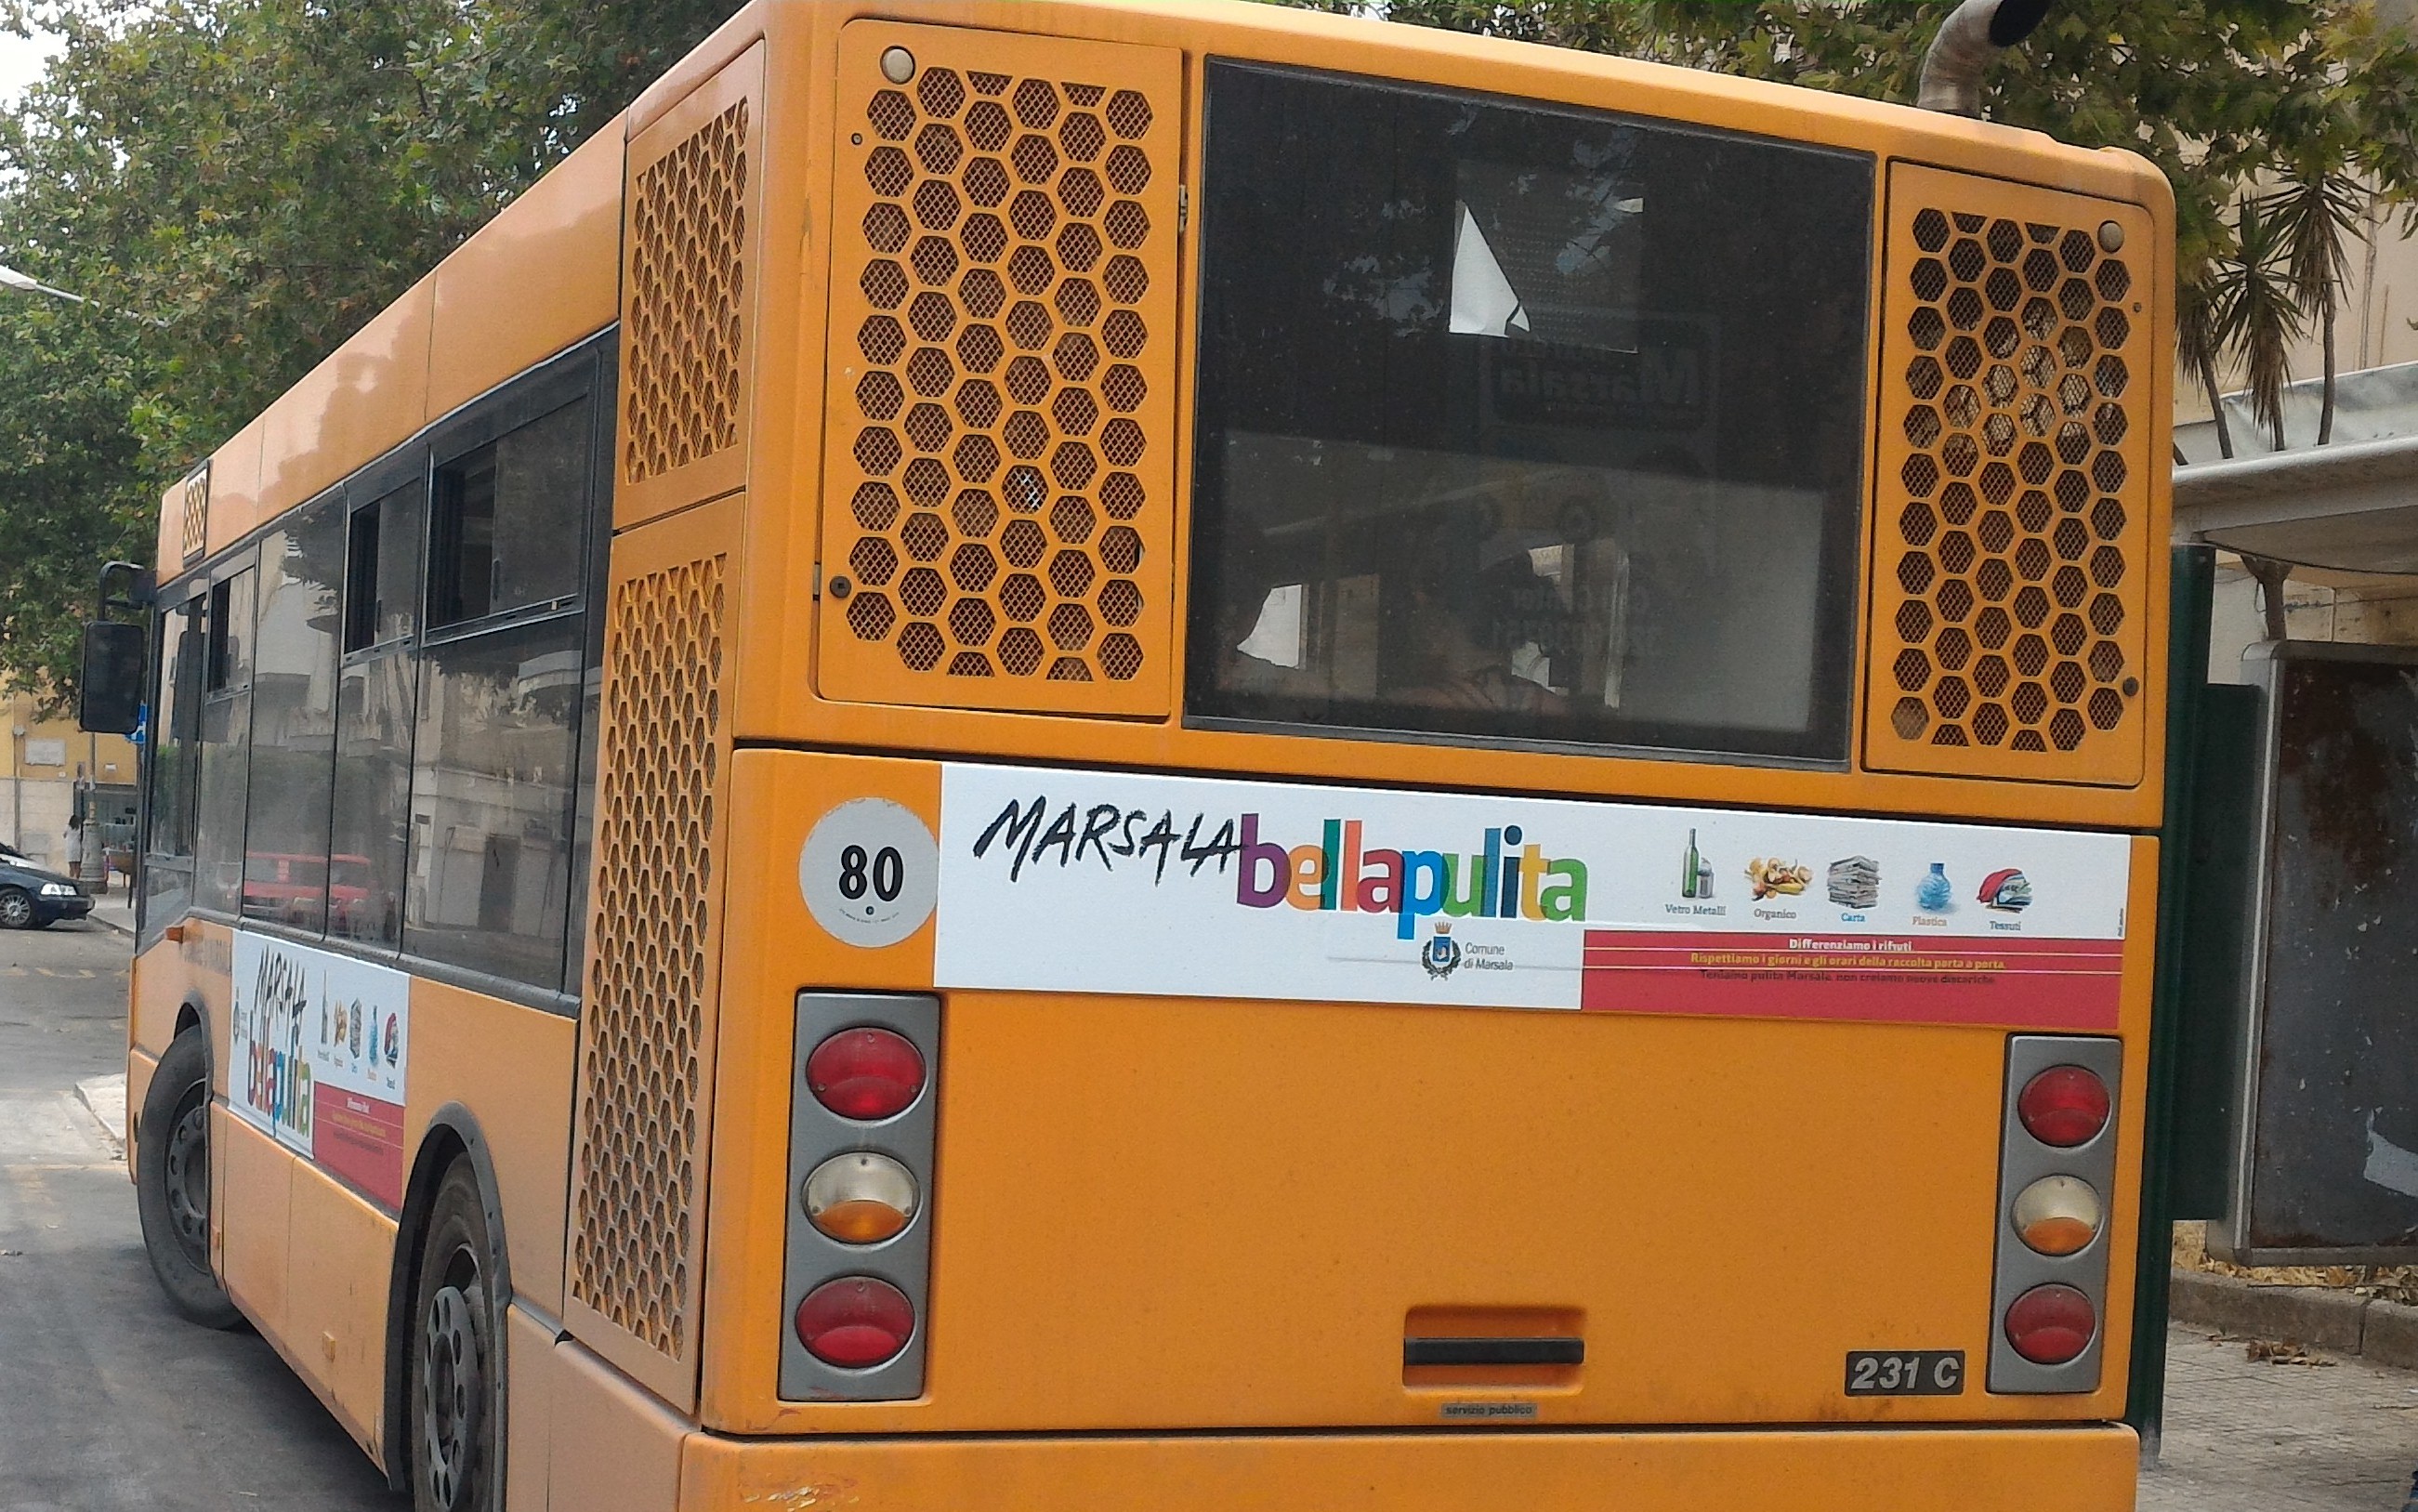 Marsala bella pulita bus